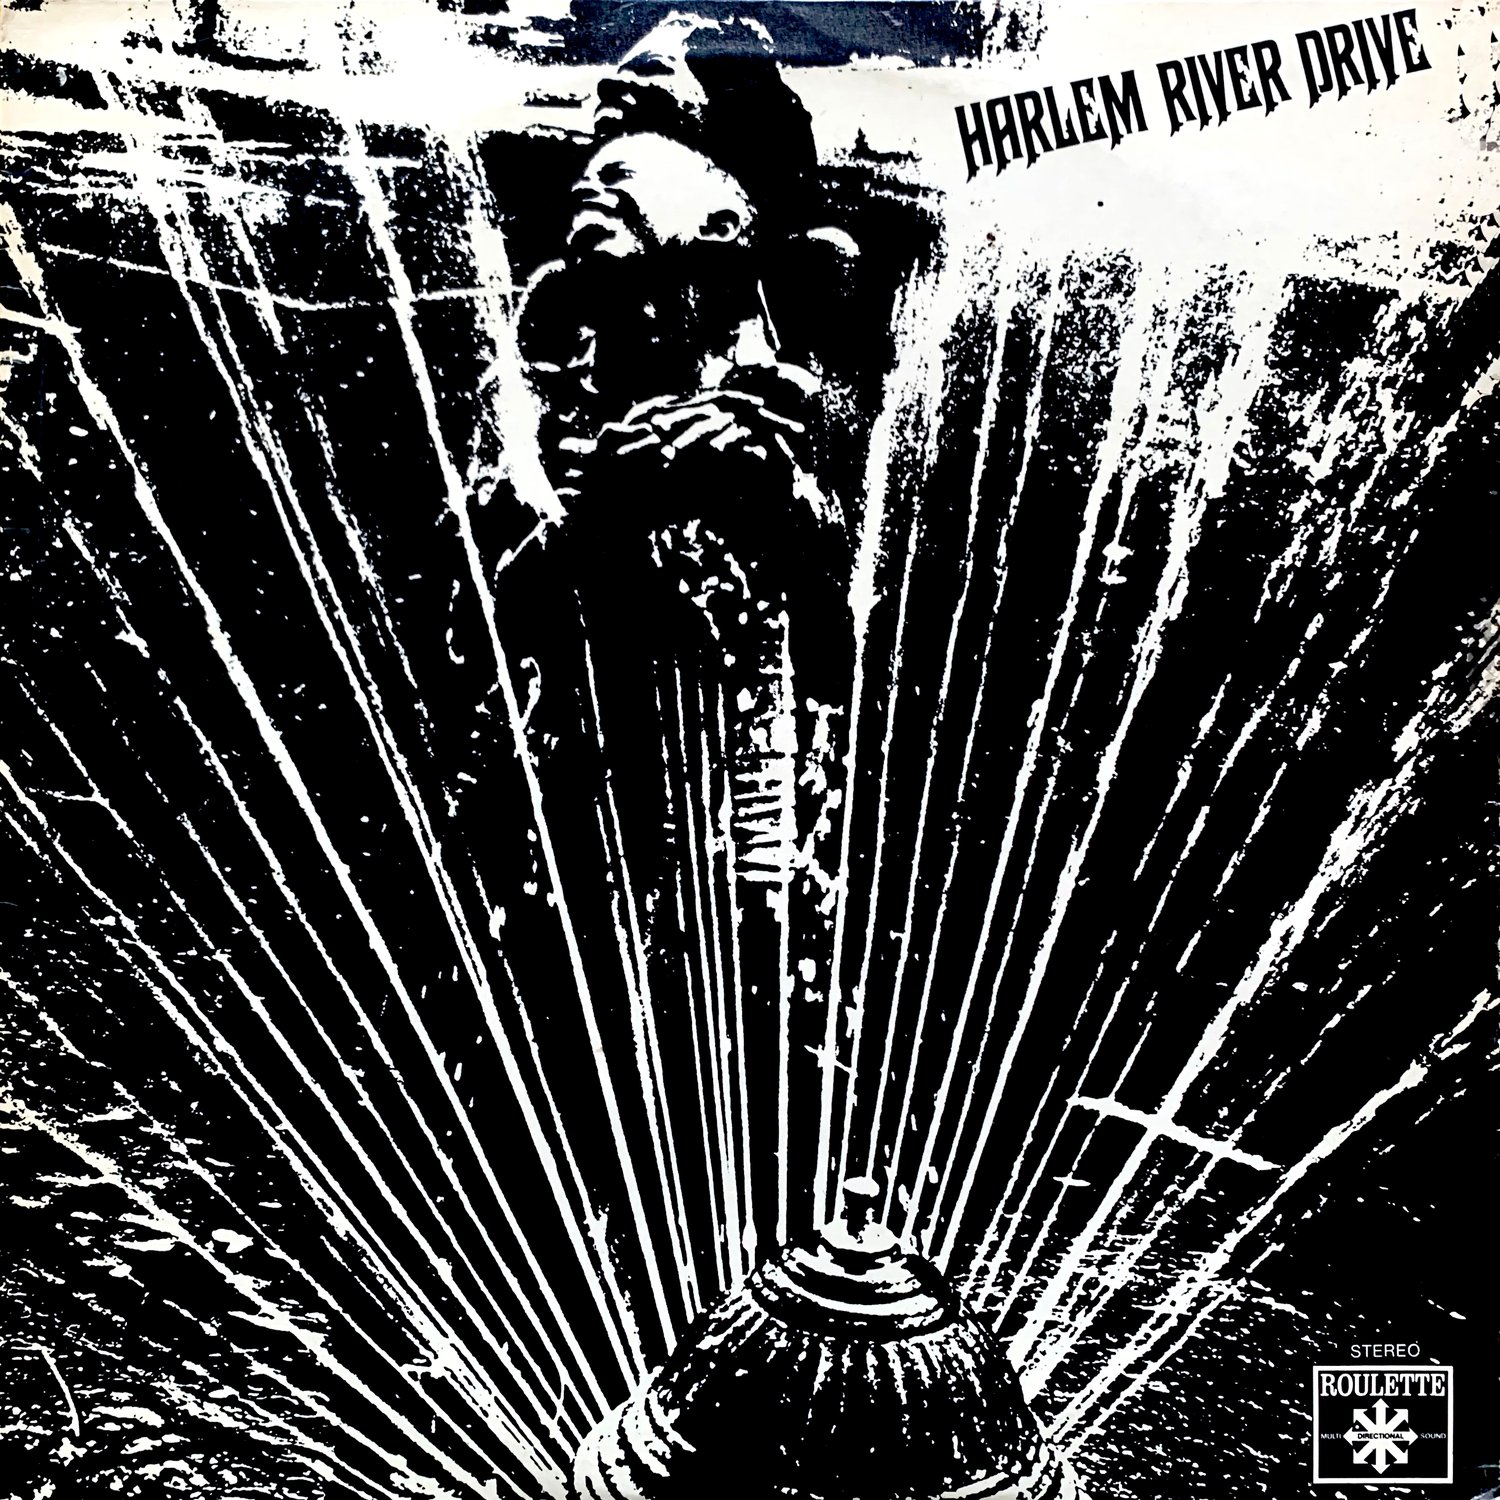 Harlem River Drive ‎- Harlem River Drive (Roulette - 1971)